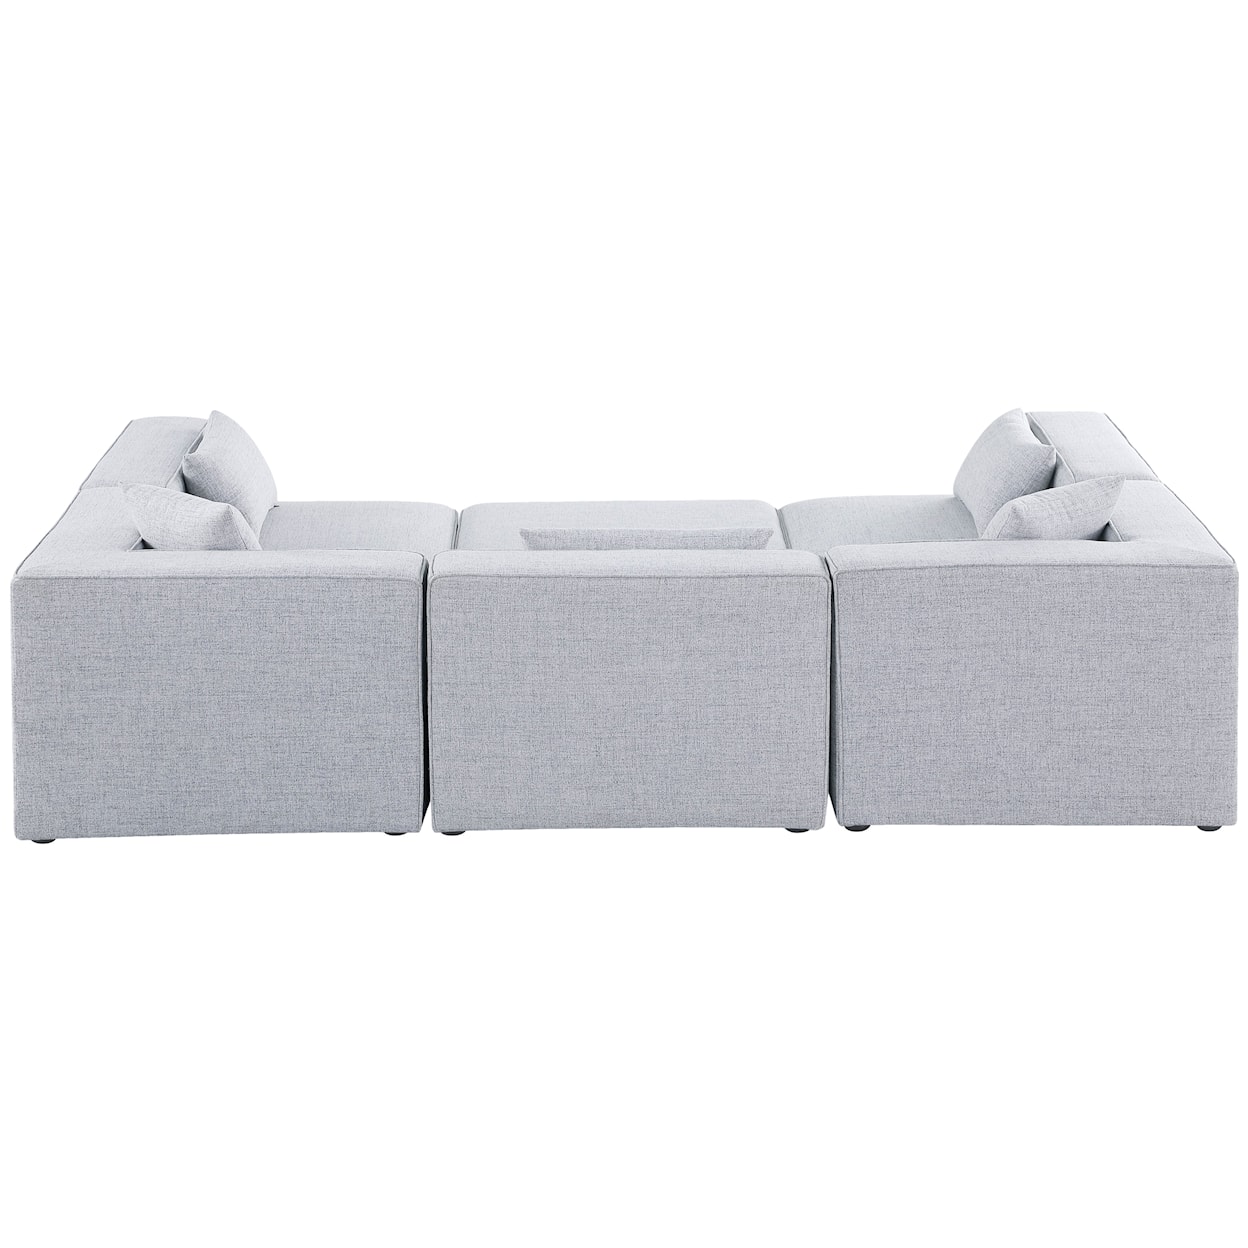 Meridian Furniture Cube Modular Sectional